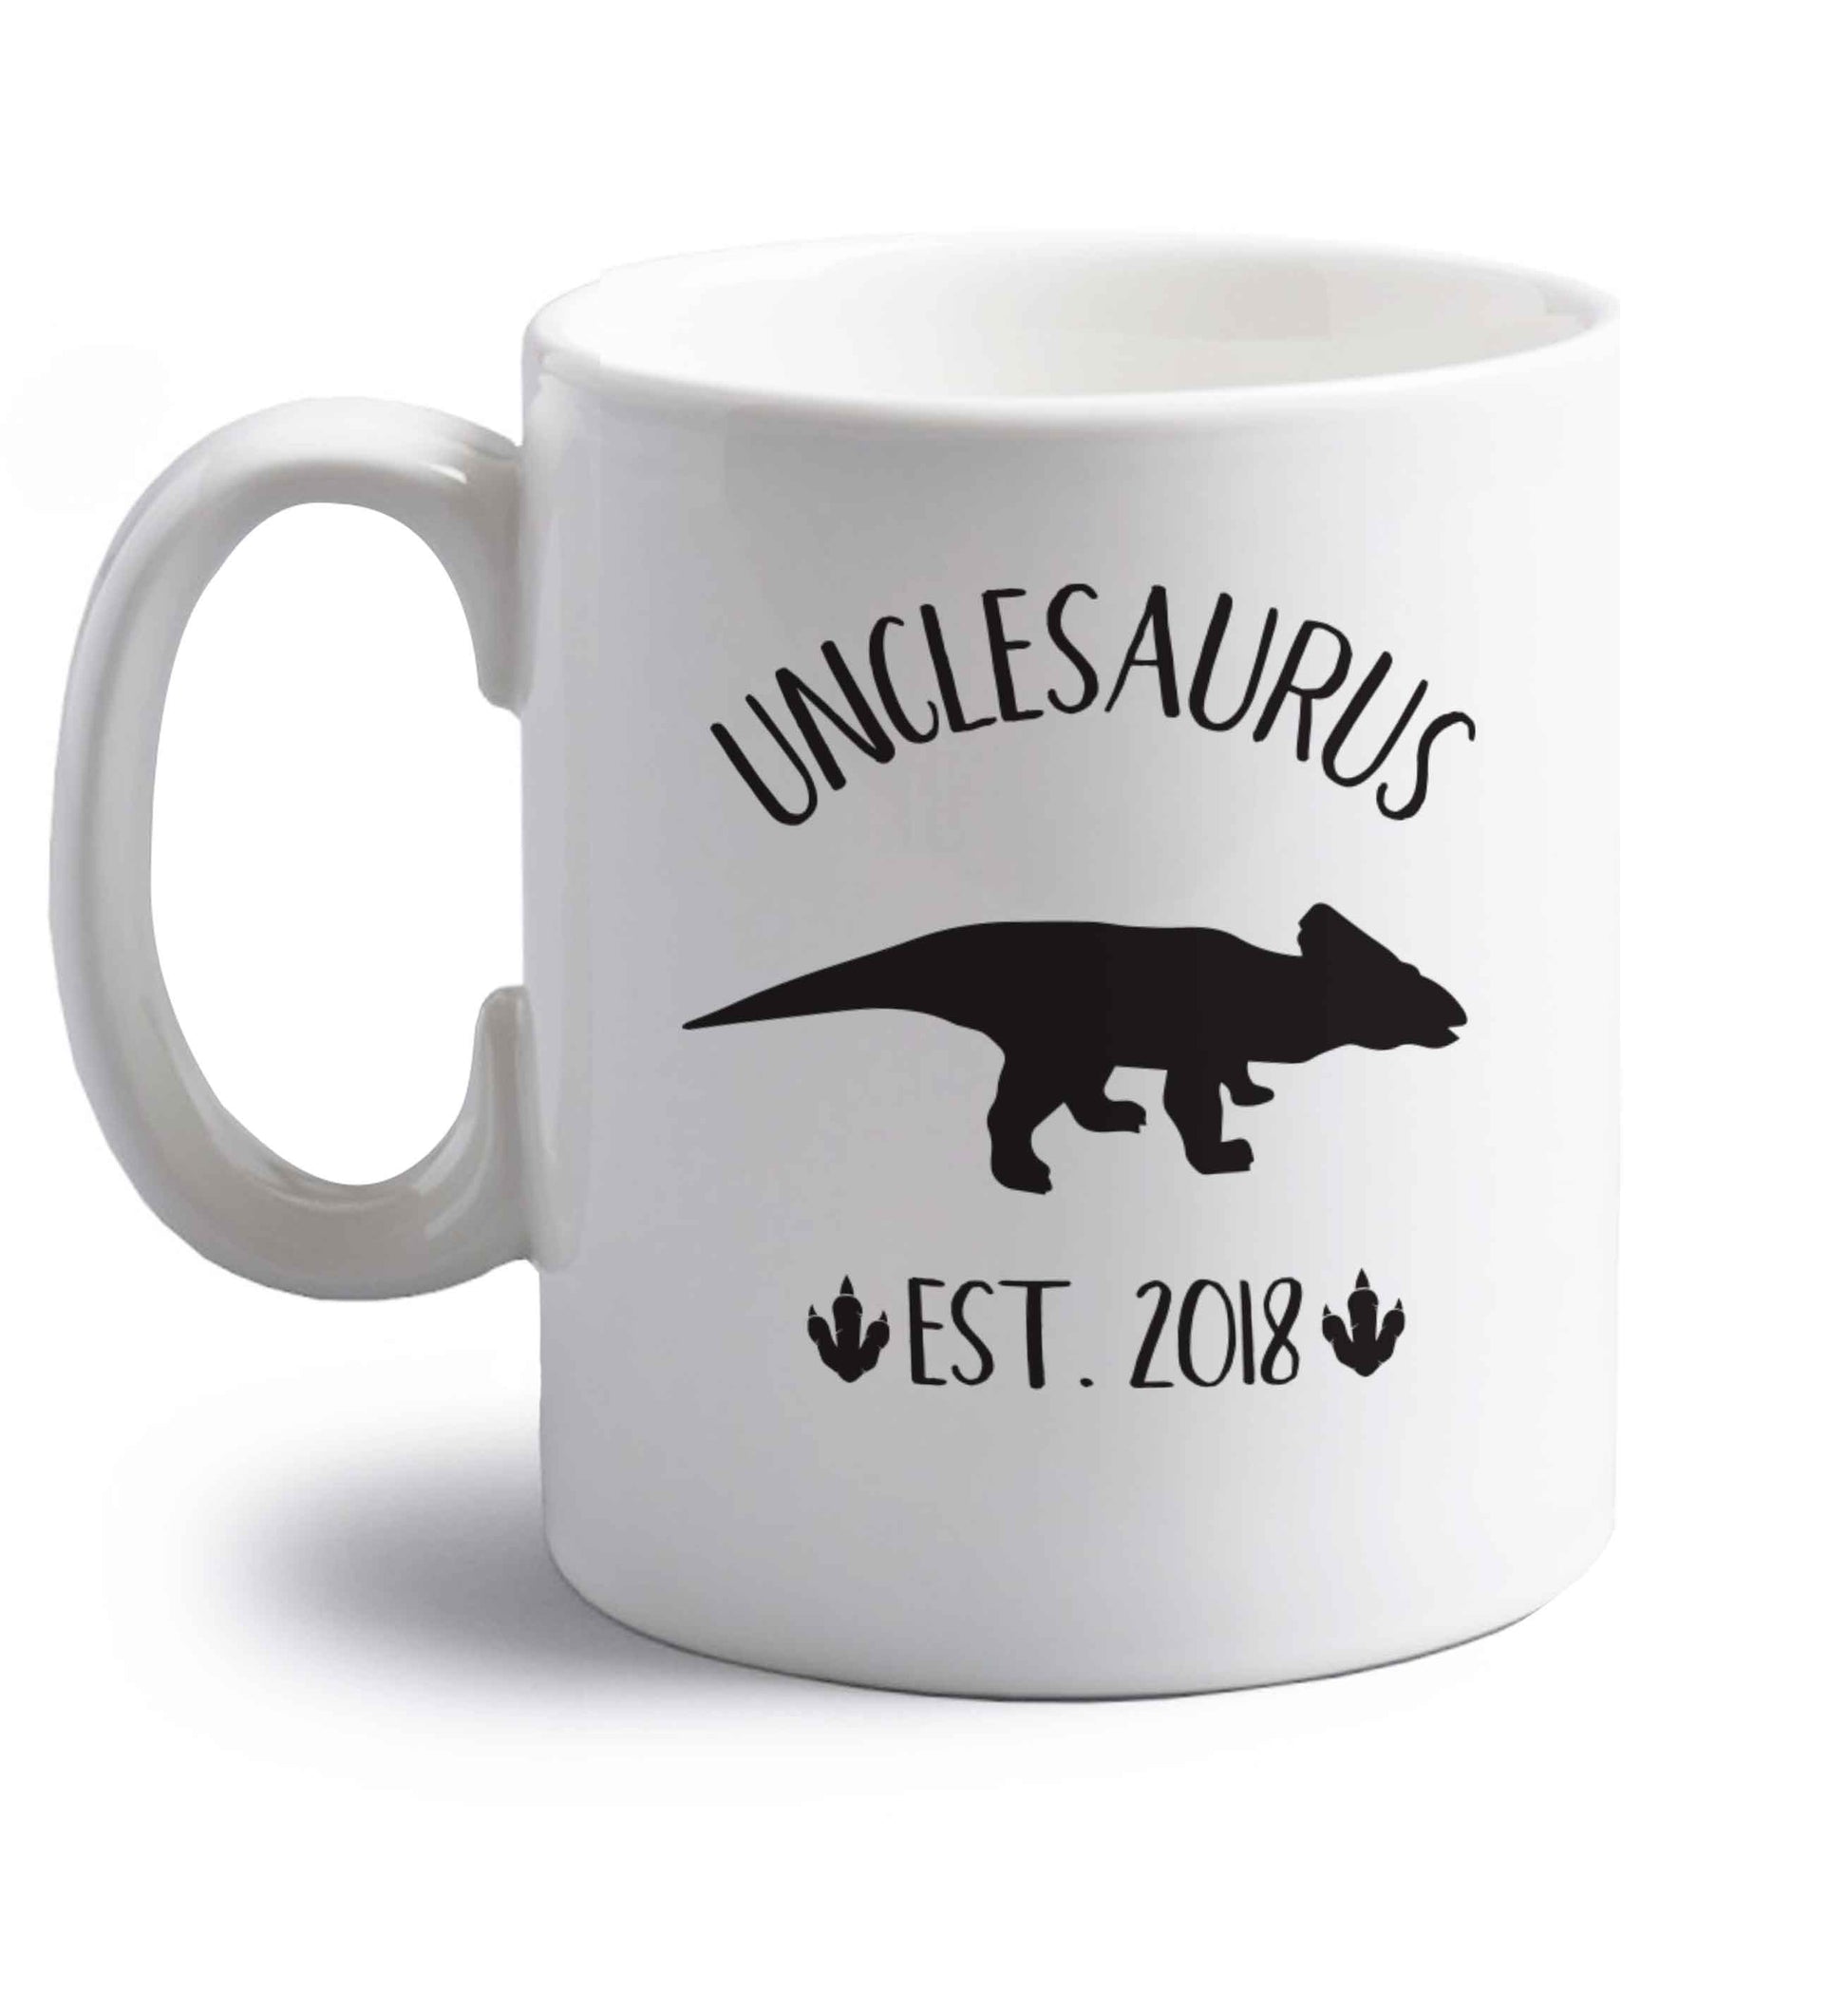 Personalised unclesaurus since (custom date) right handed white ceramic mug 